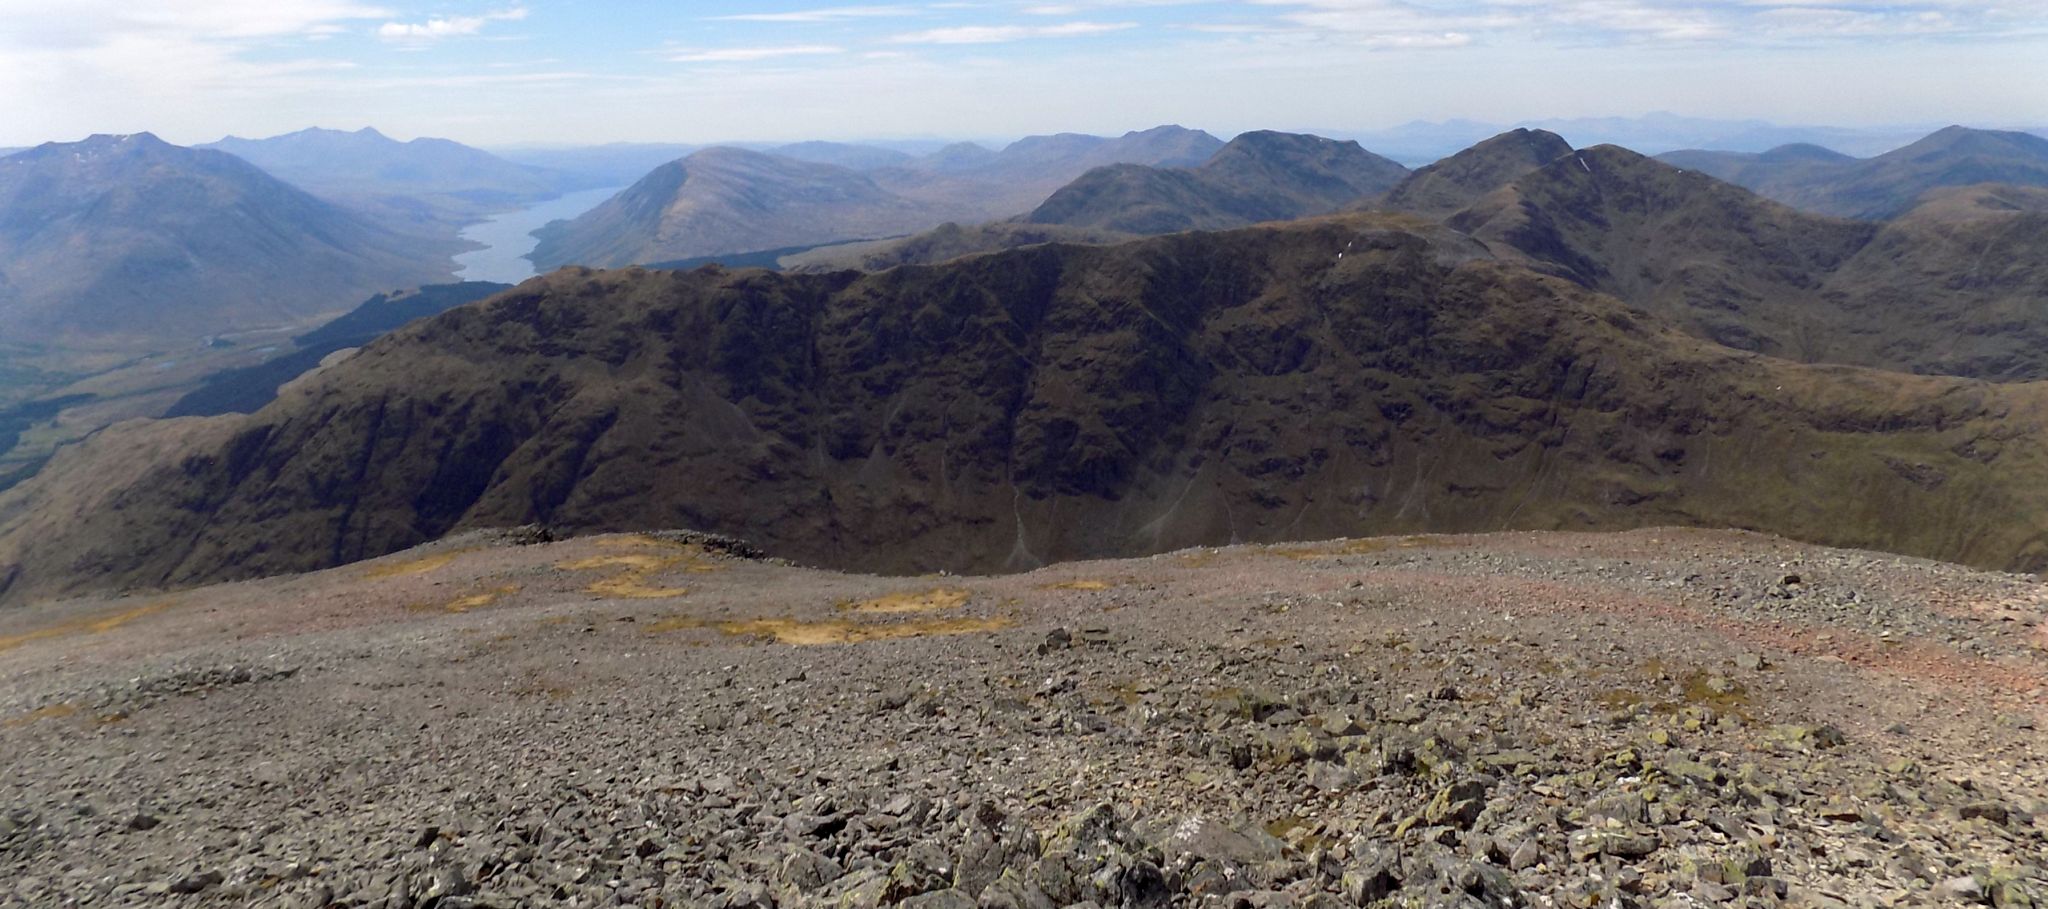 SW Ridge and Face of Bidean nam Bian from summit of Beinn Maol Chaluim